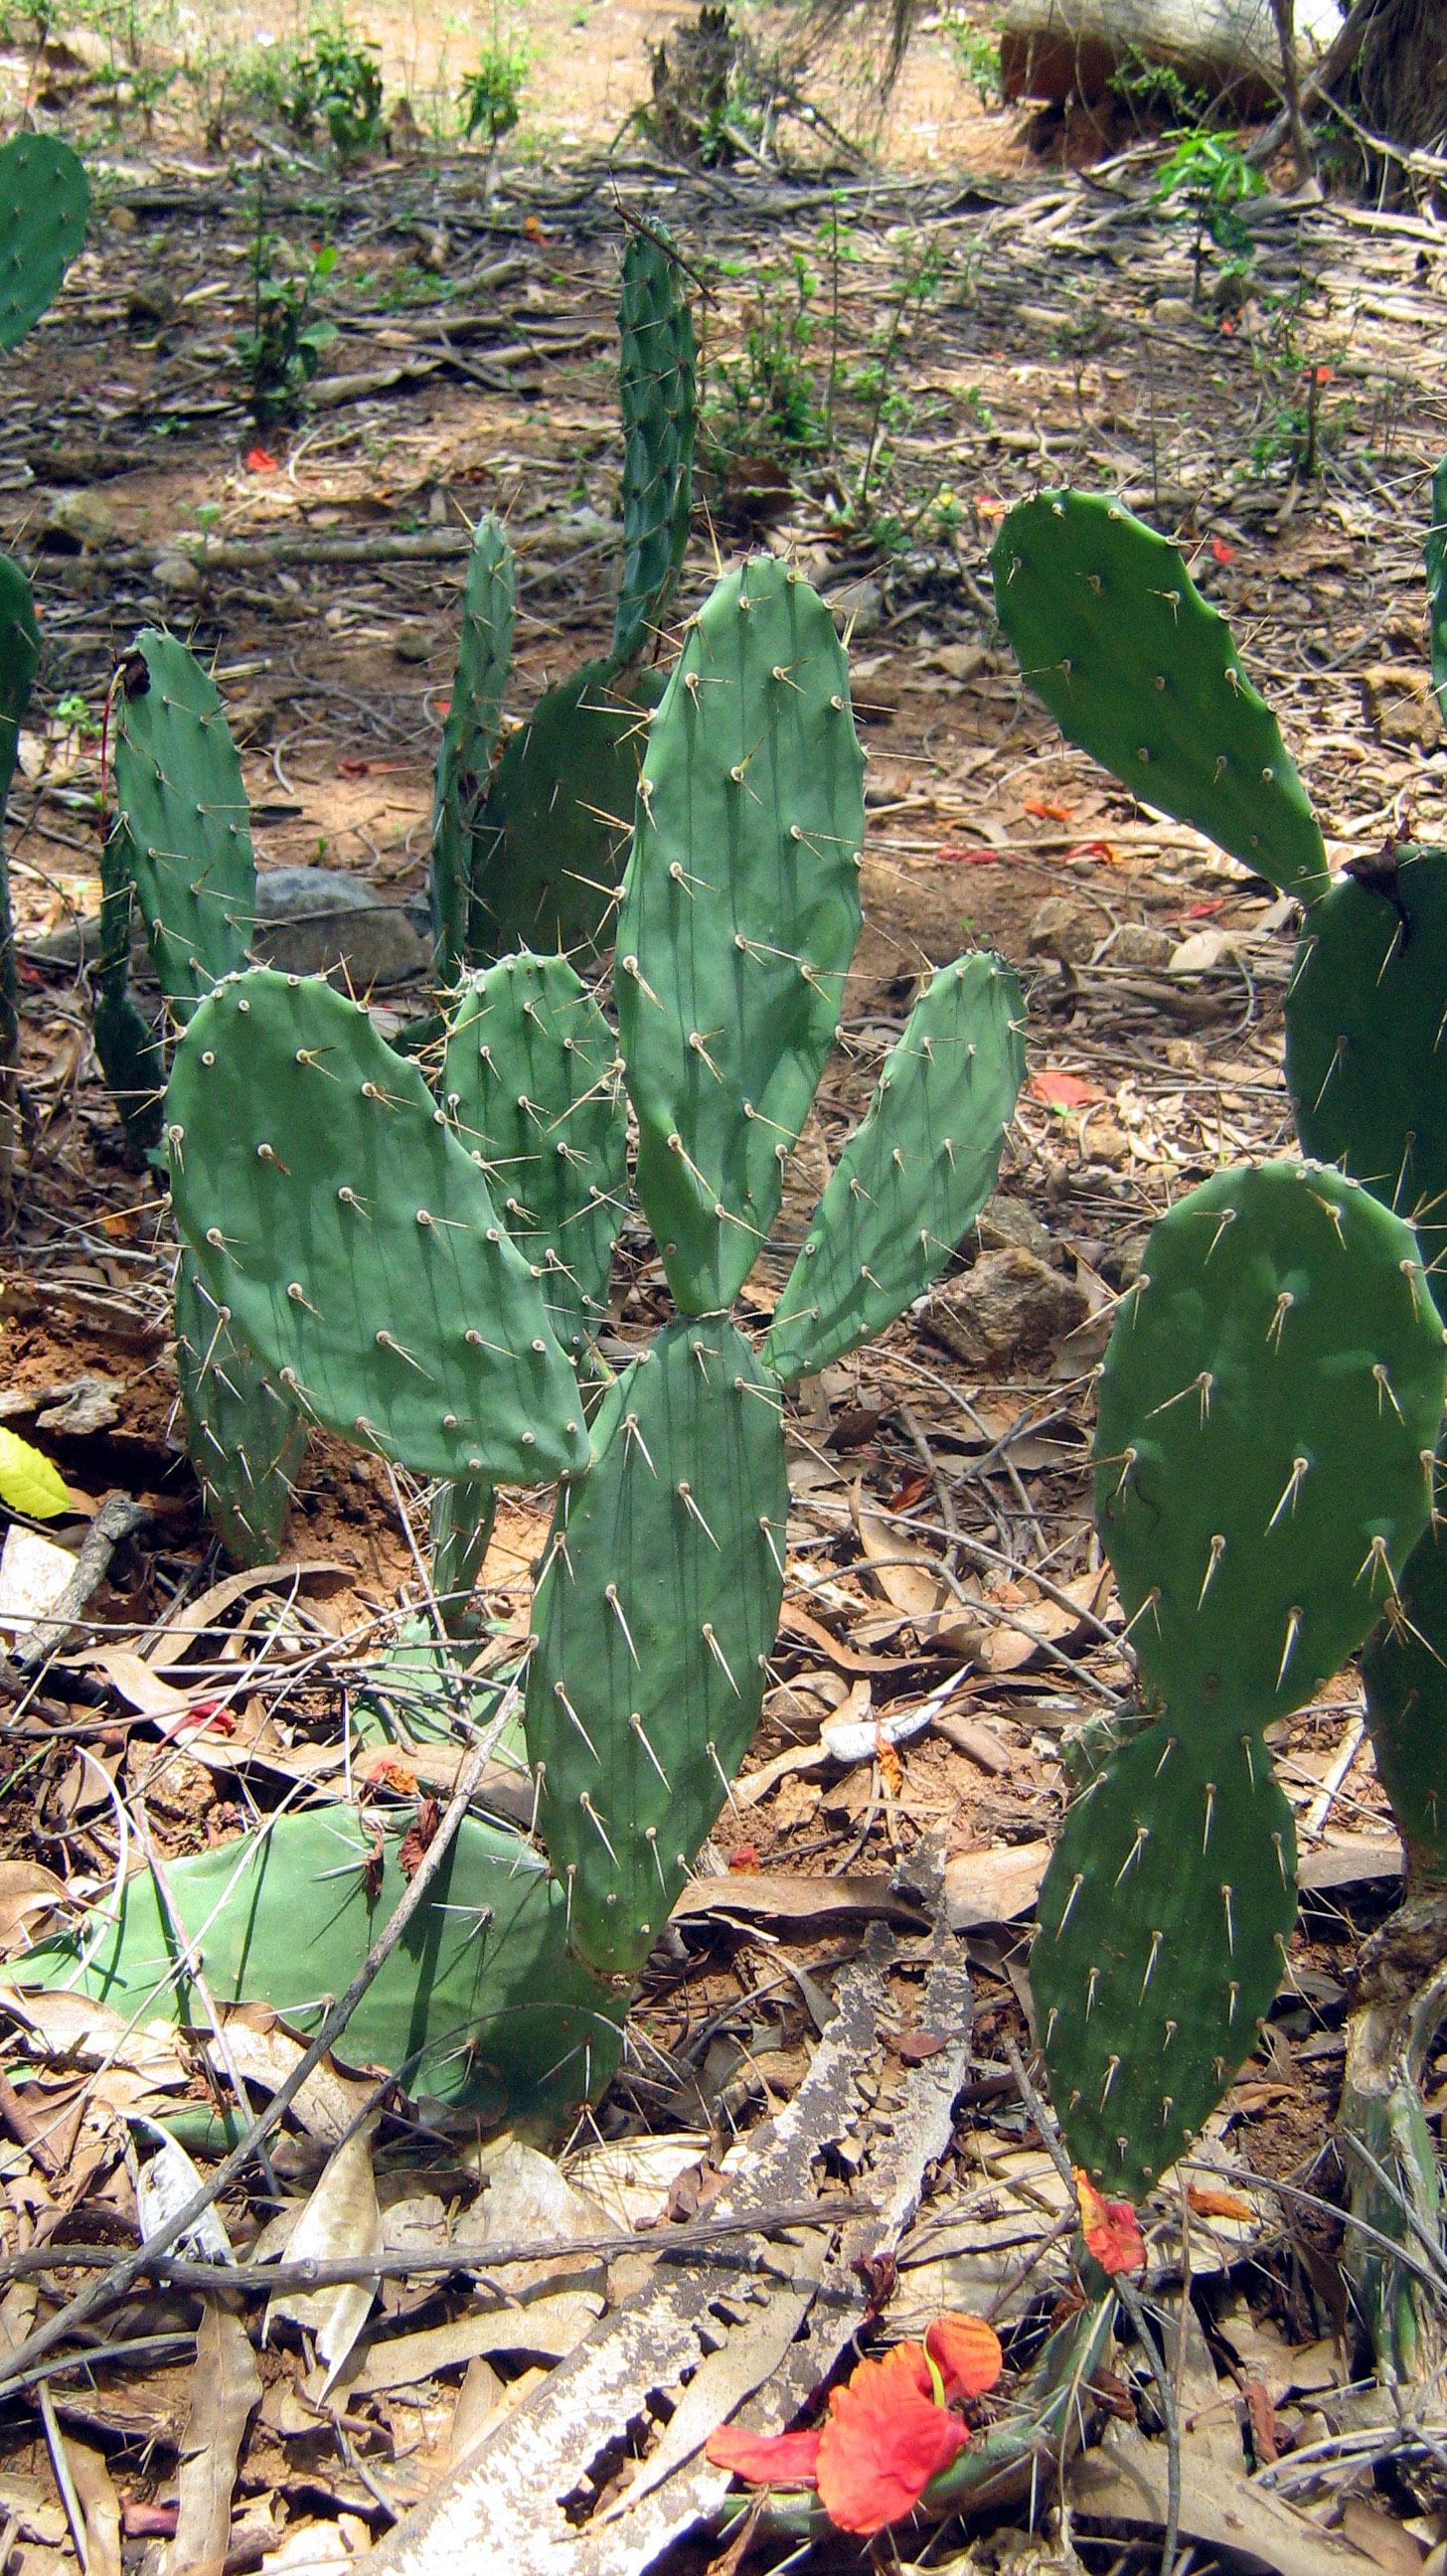 http://upload.wikimedia.org/wikipedia/commons/7/75/Cactus-chennaiTAMILNADU33India.jpg